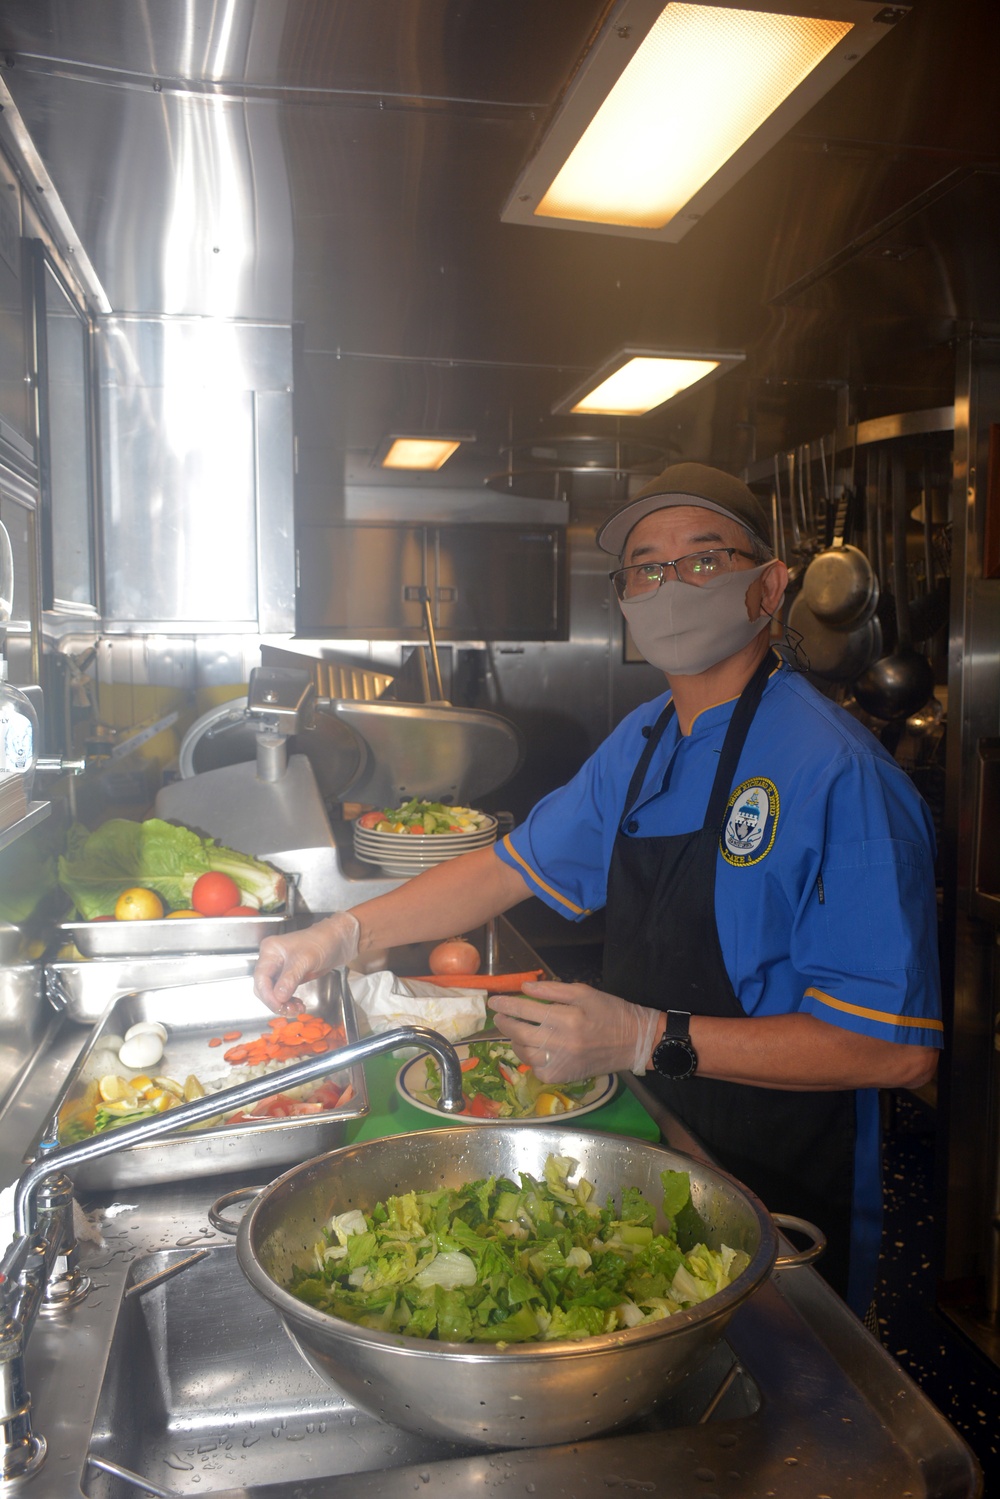 USNS Richard E. Byrd Wins 9th David M. Cook Food Service Award